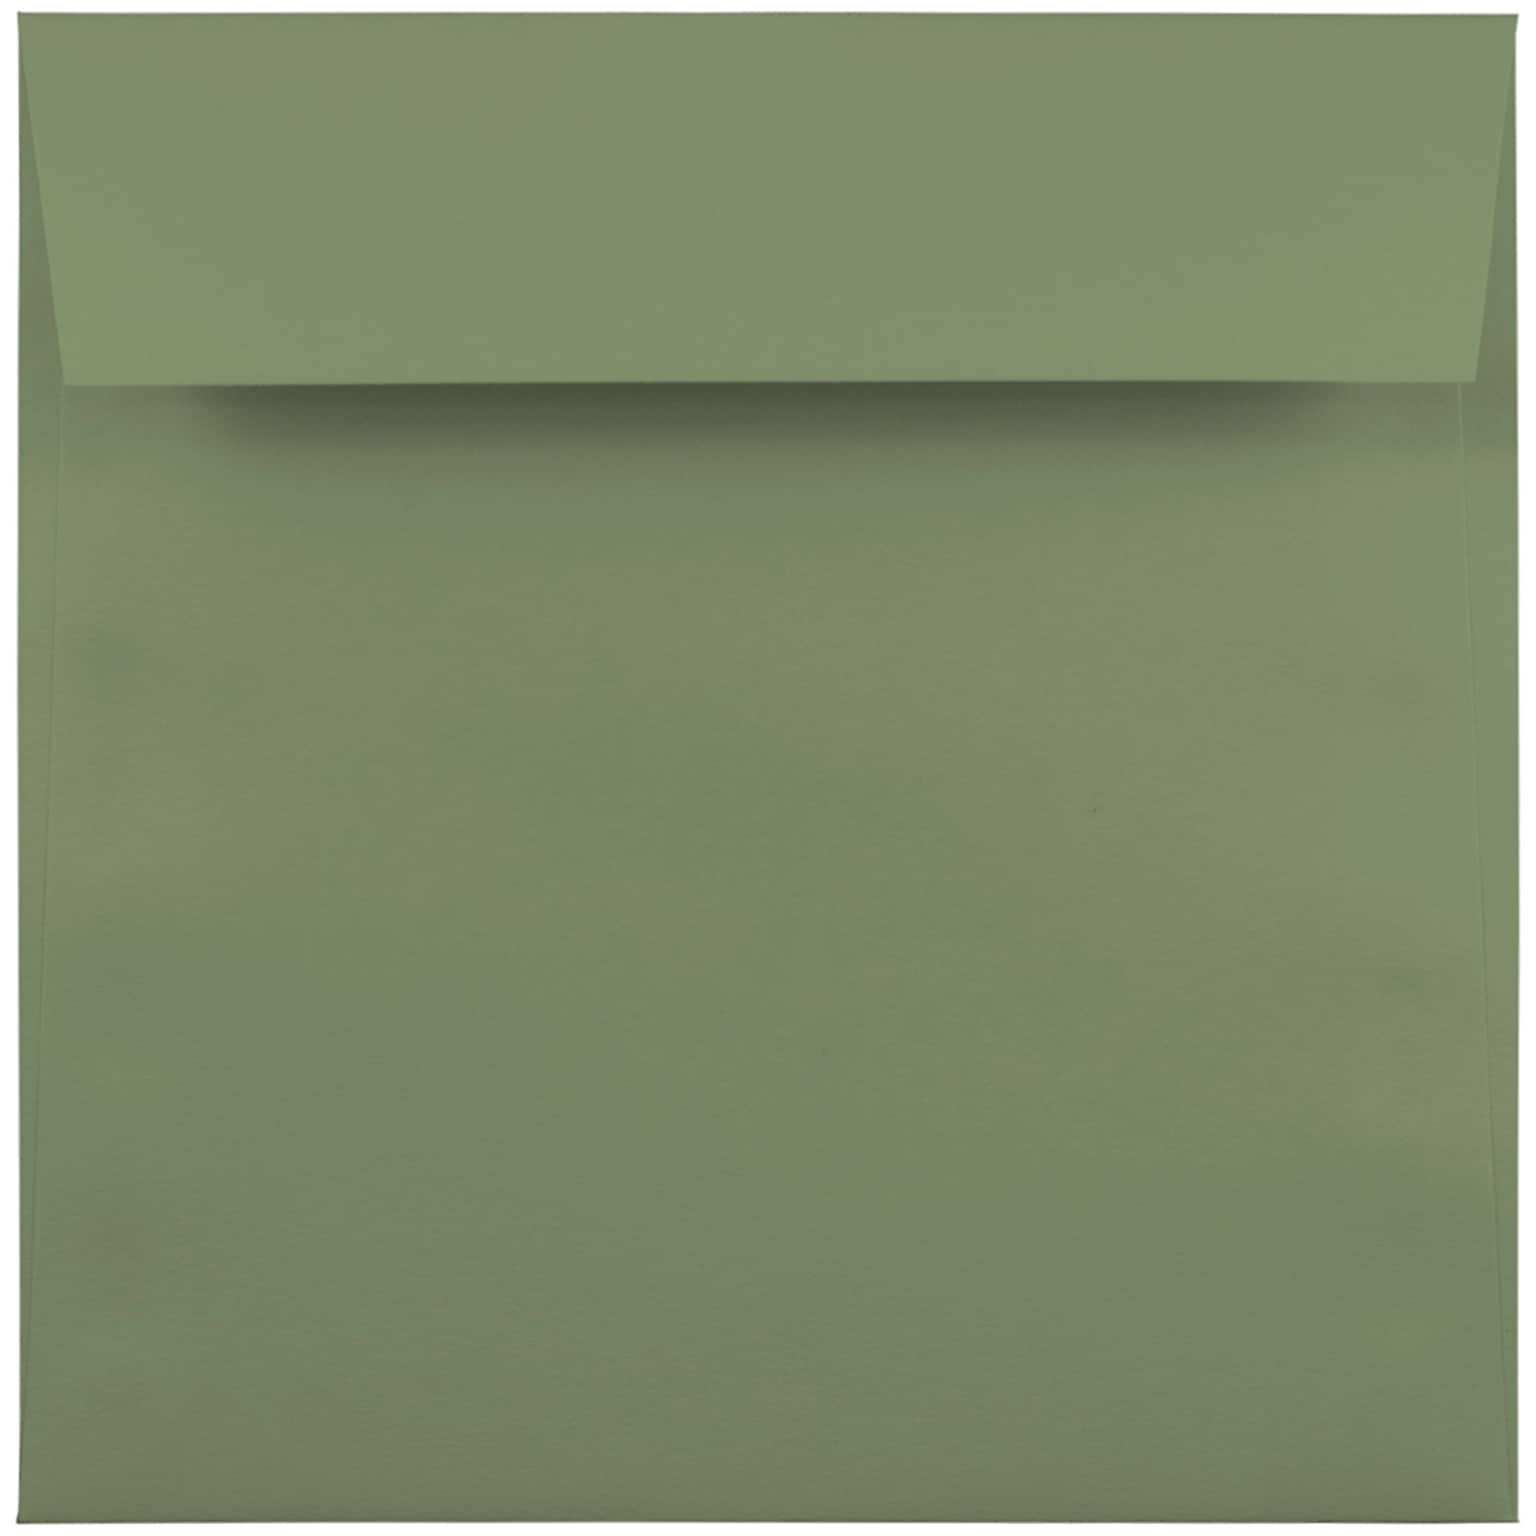 JAM PAPER Premium Invitation Envelopes, 6 1/2 x 6 1/2, Olive Green, 25/Pack (187021)